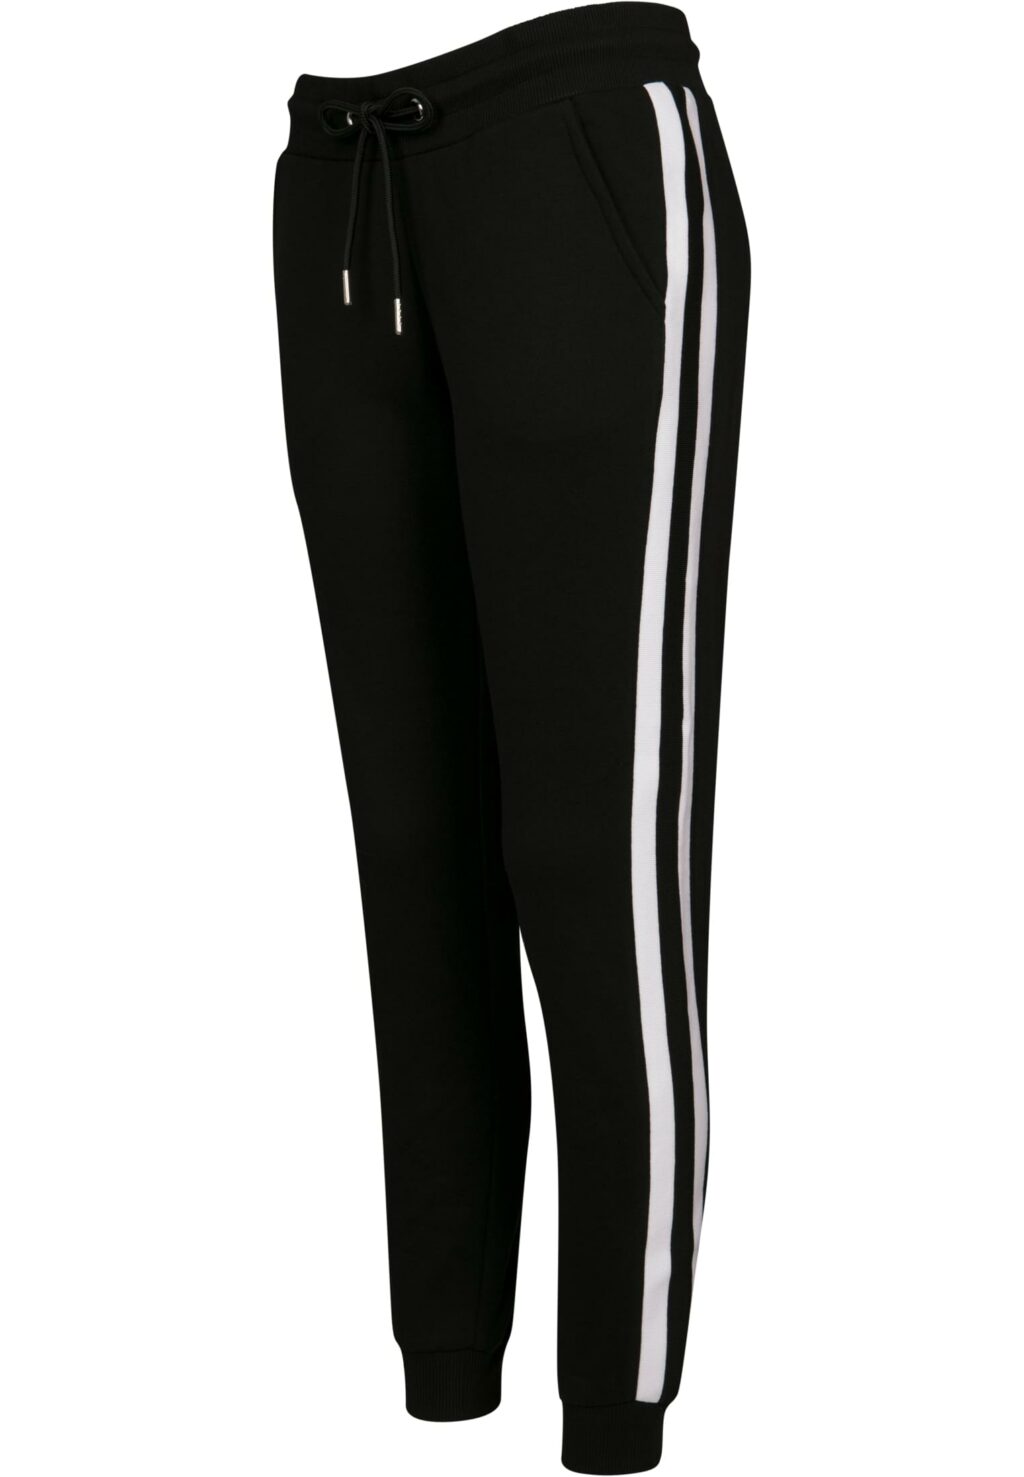 Urban Classics Ladies College Contrast Sweatpants black/white/black TB2453